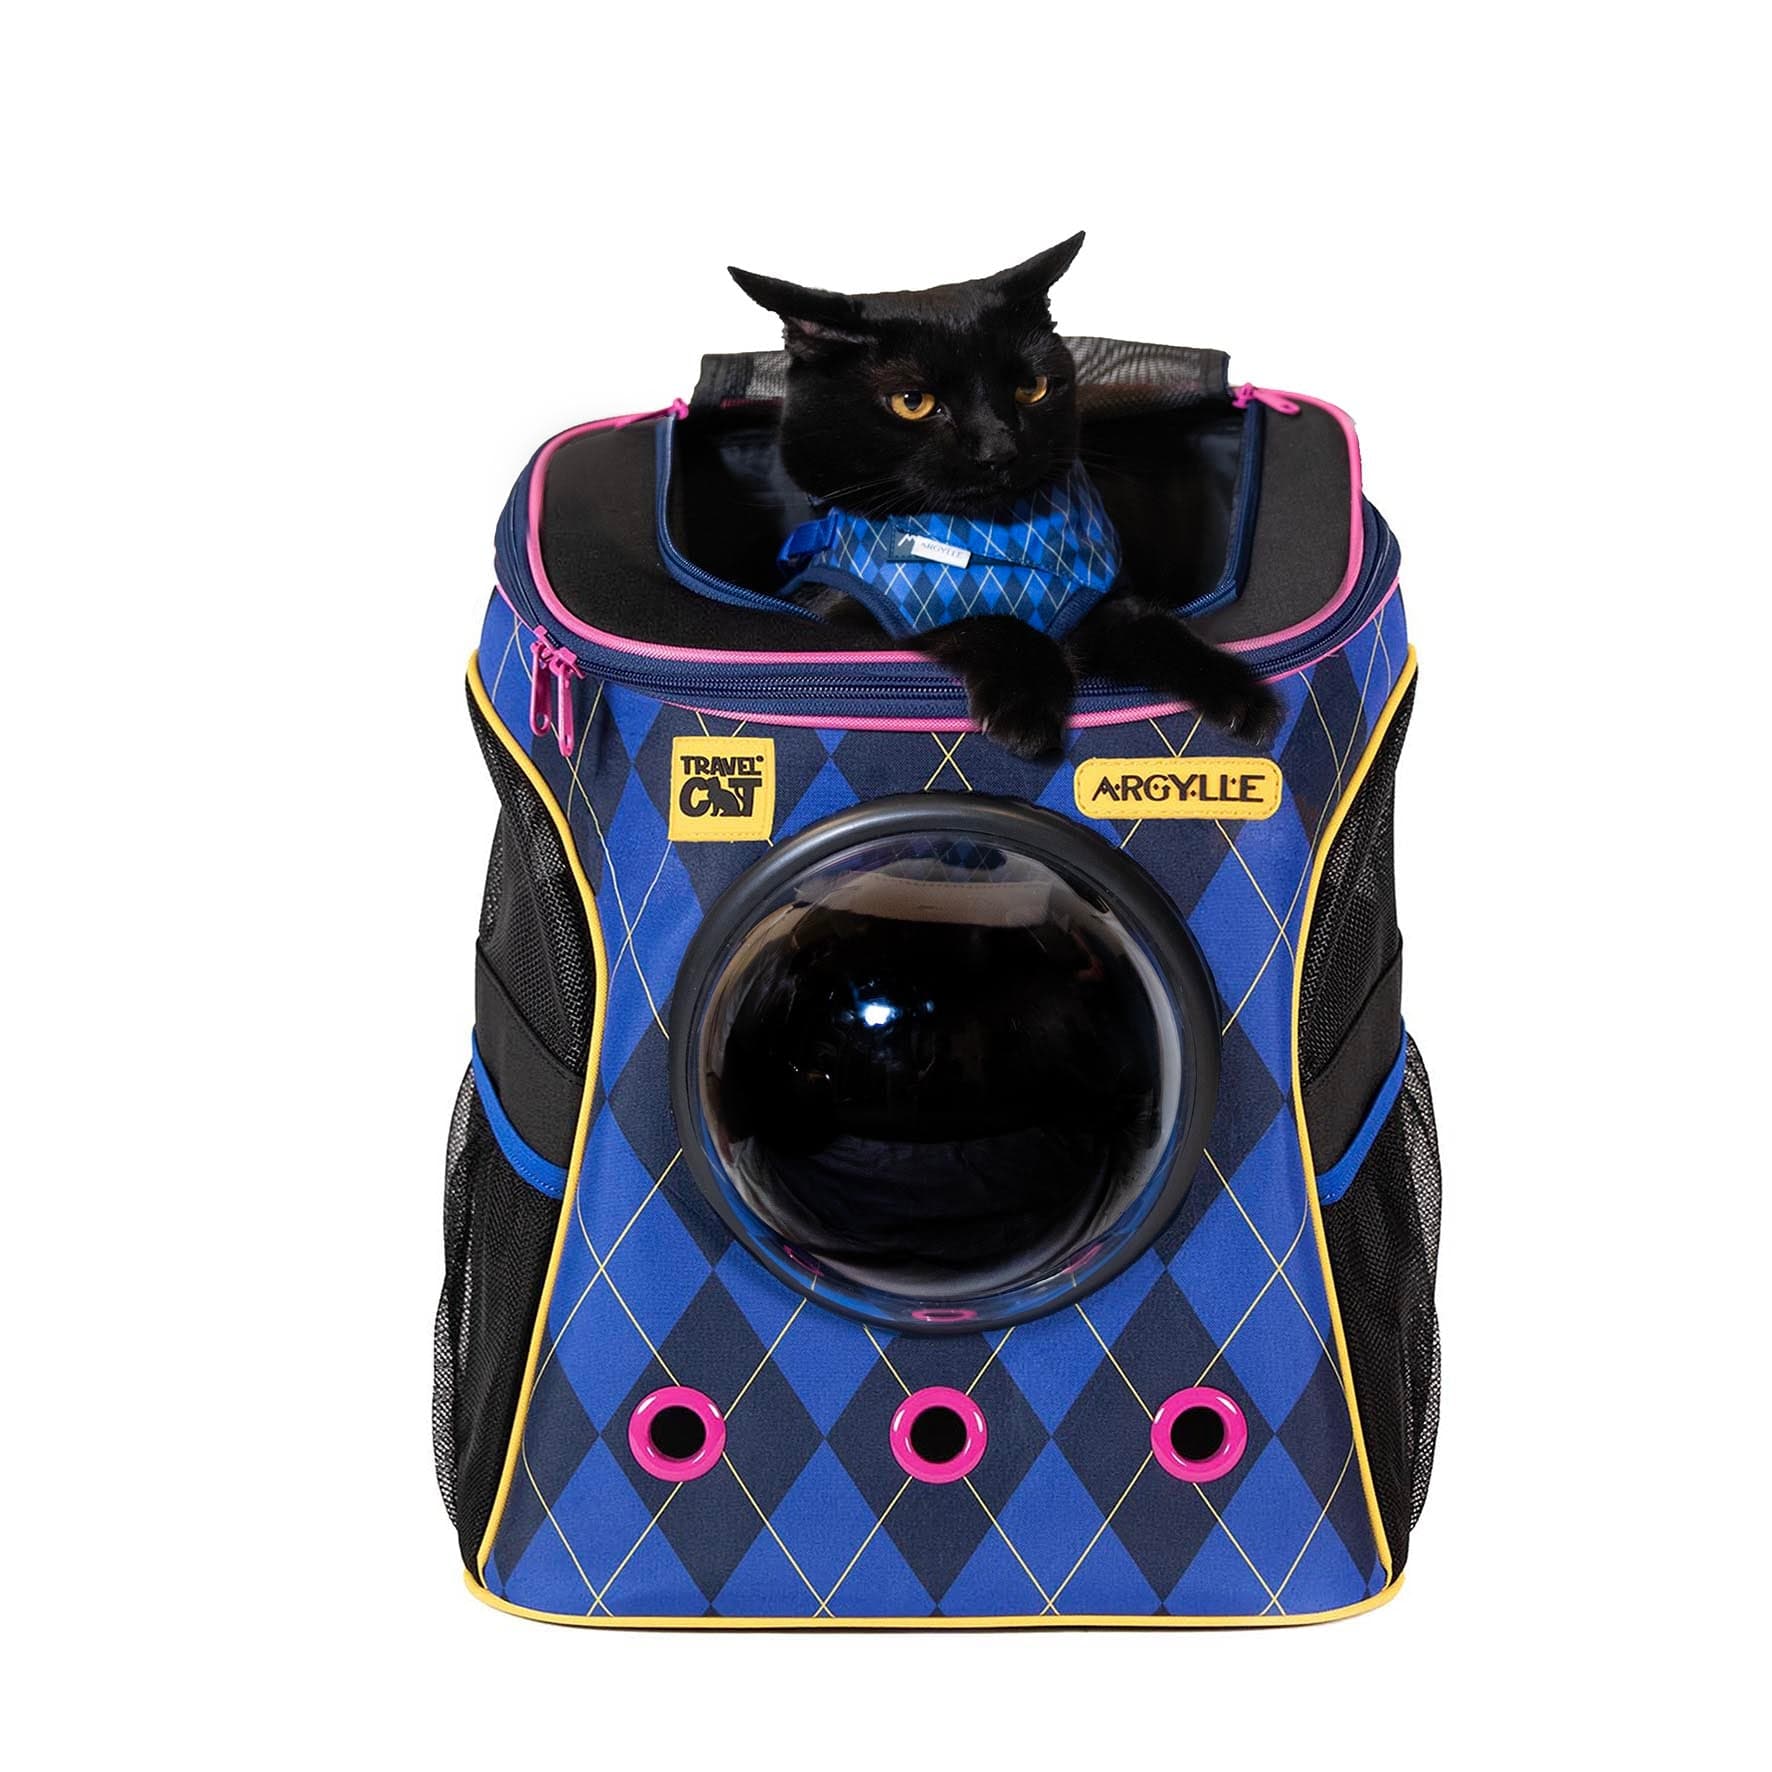 Argylle x Travel Cat "Spy" Cat Backpack Complete Collection Bundle